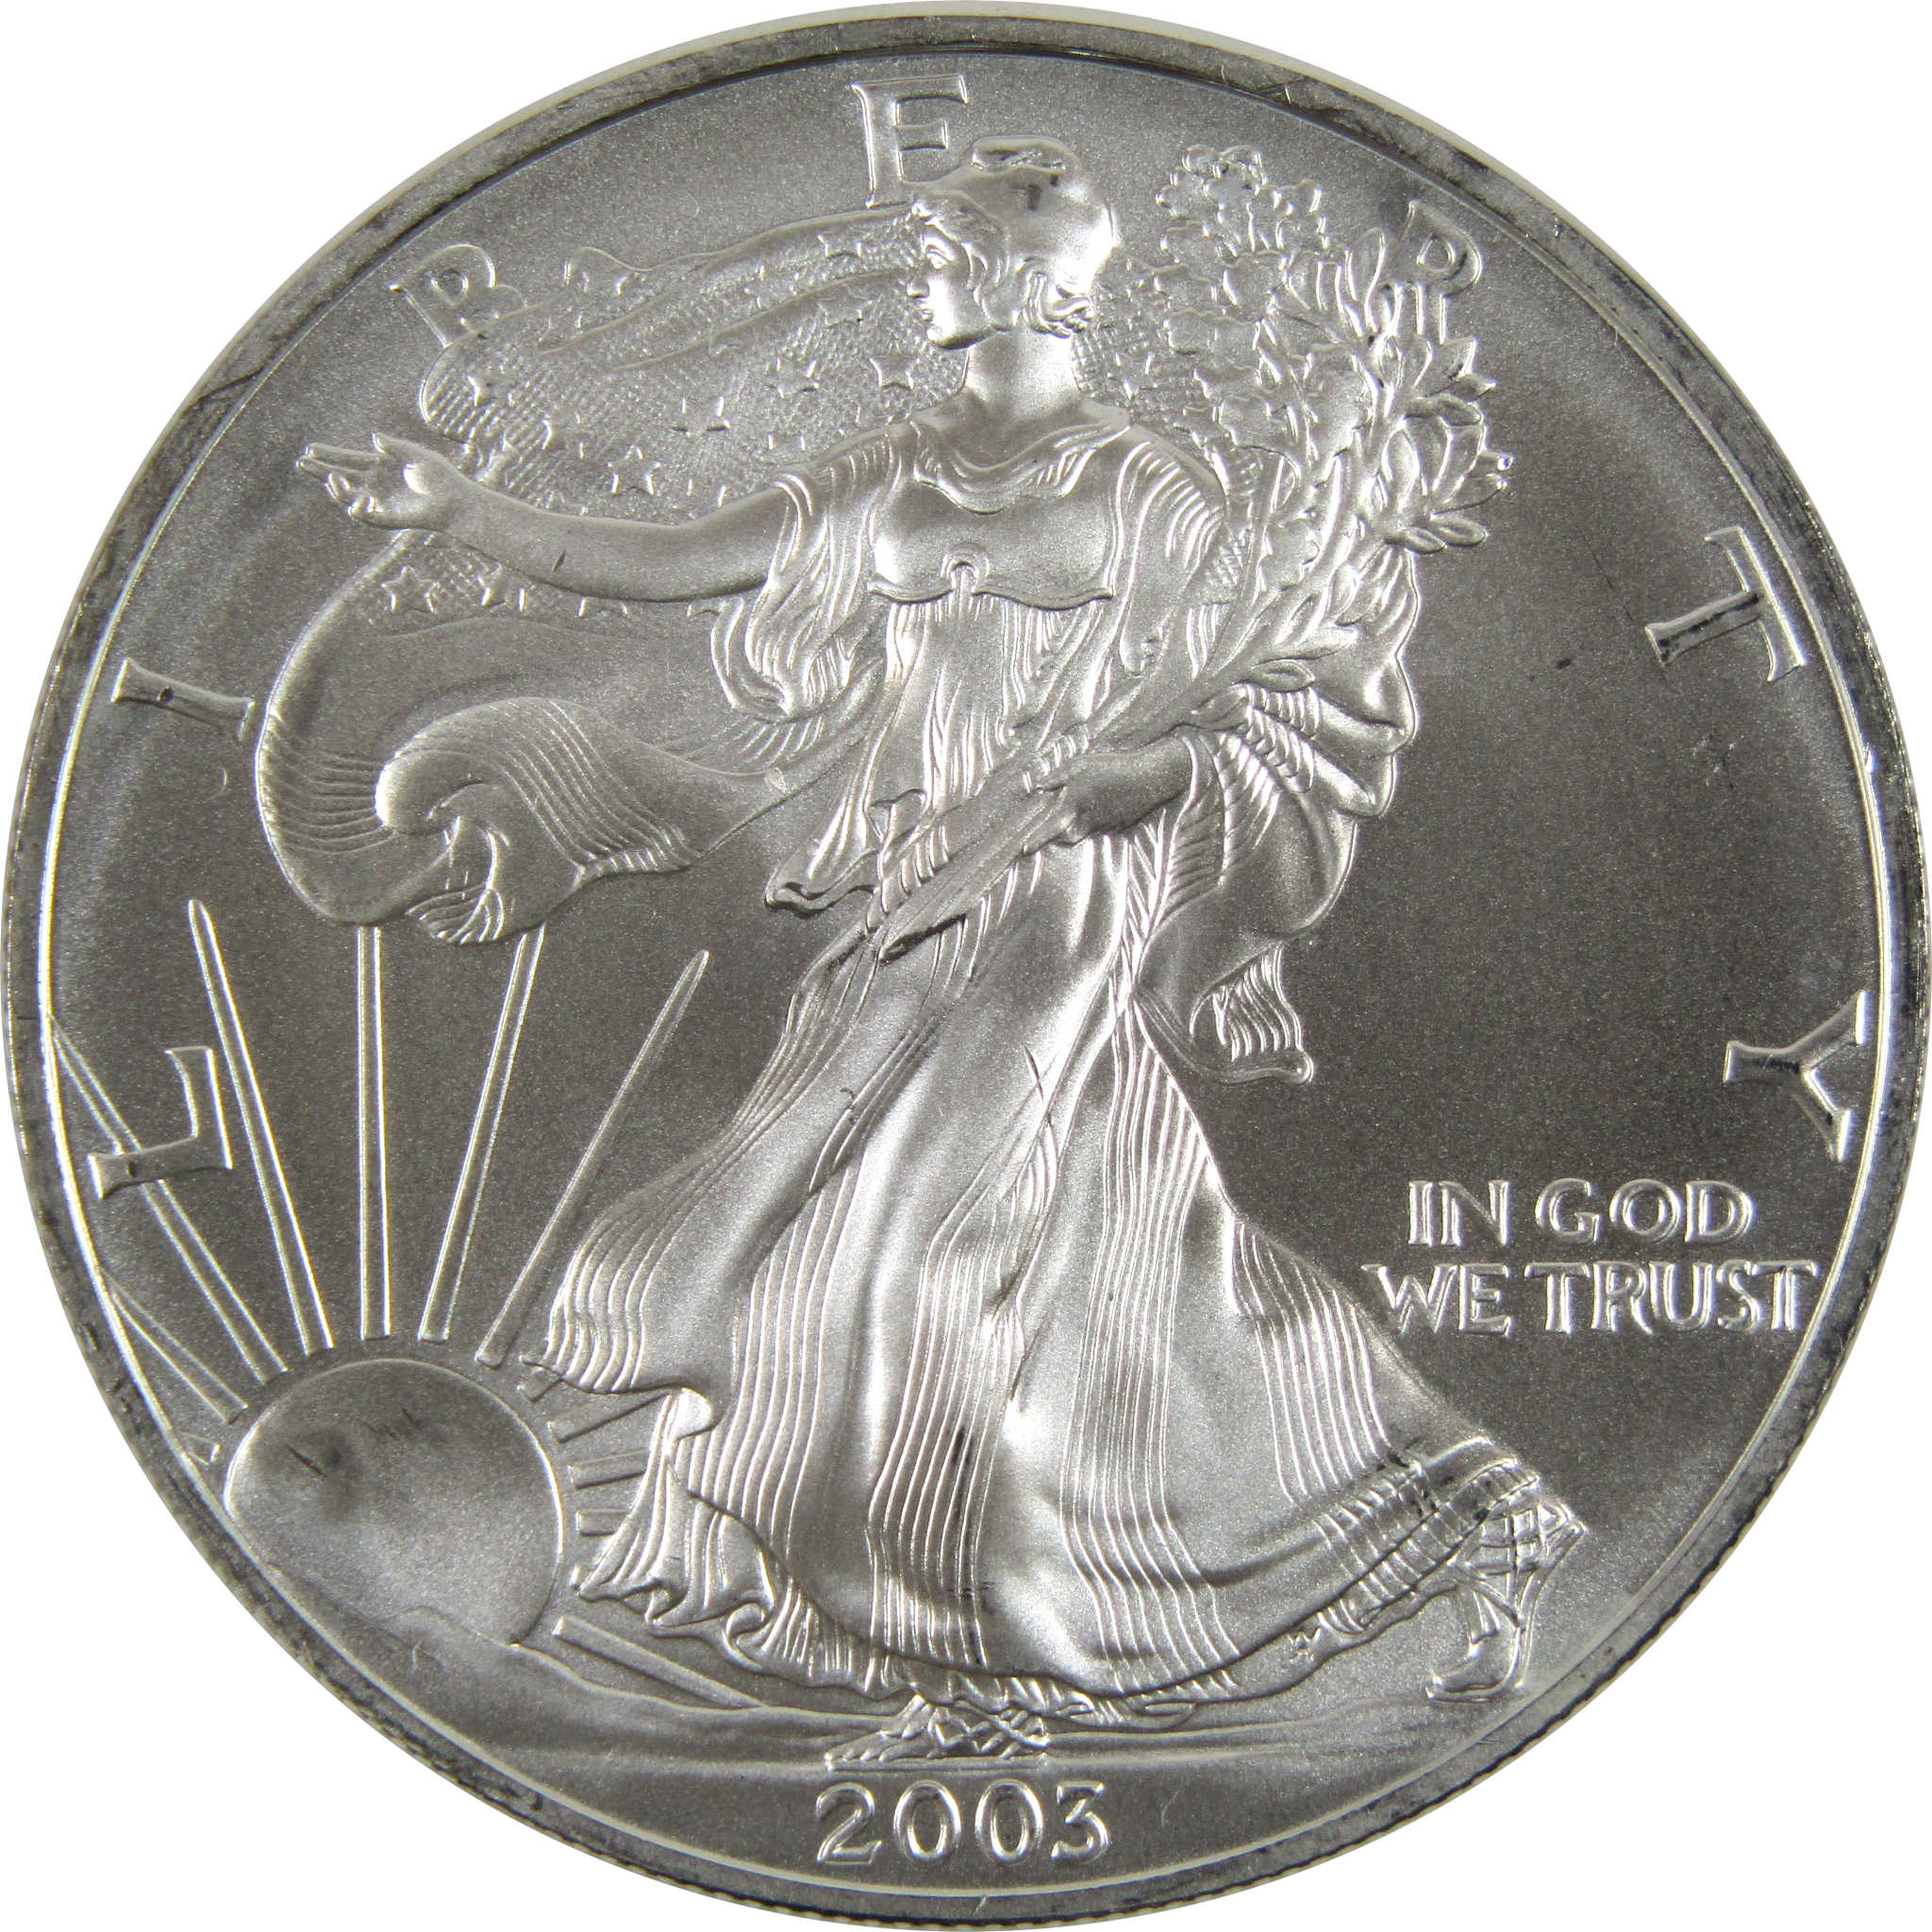 2003 American Eagle BU Uncirculated 1 oz .999 Silver Bullion $1 Coin